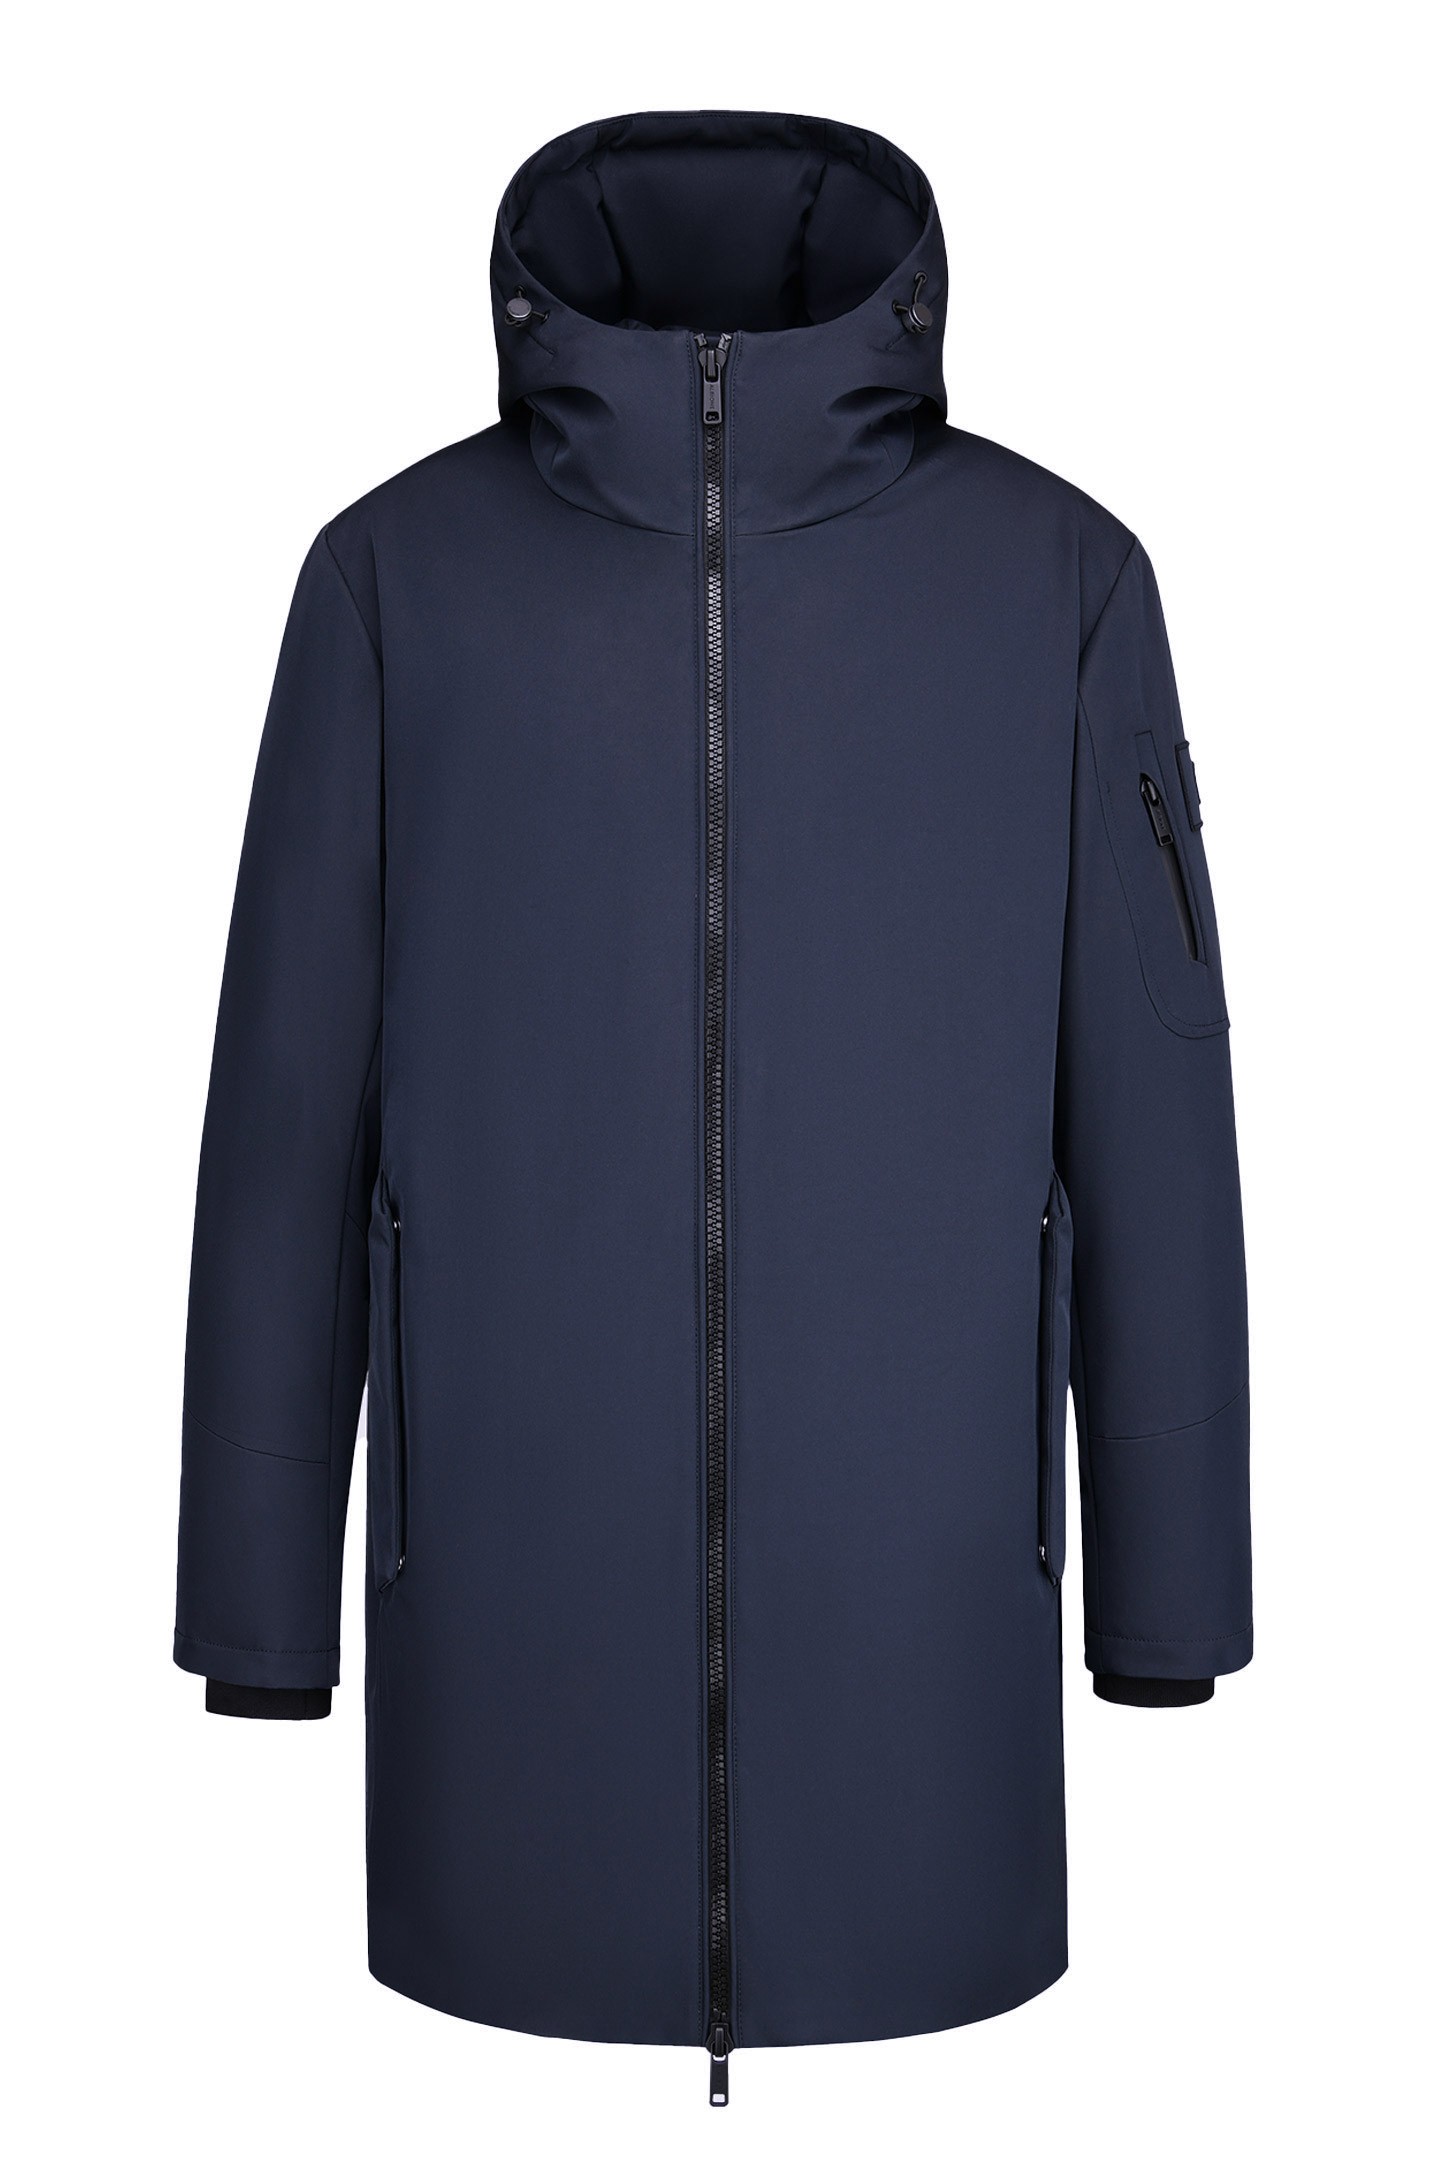 Куртка Albione 274Jm, цвет темно-синий, размер 60